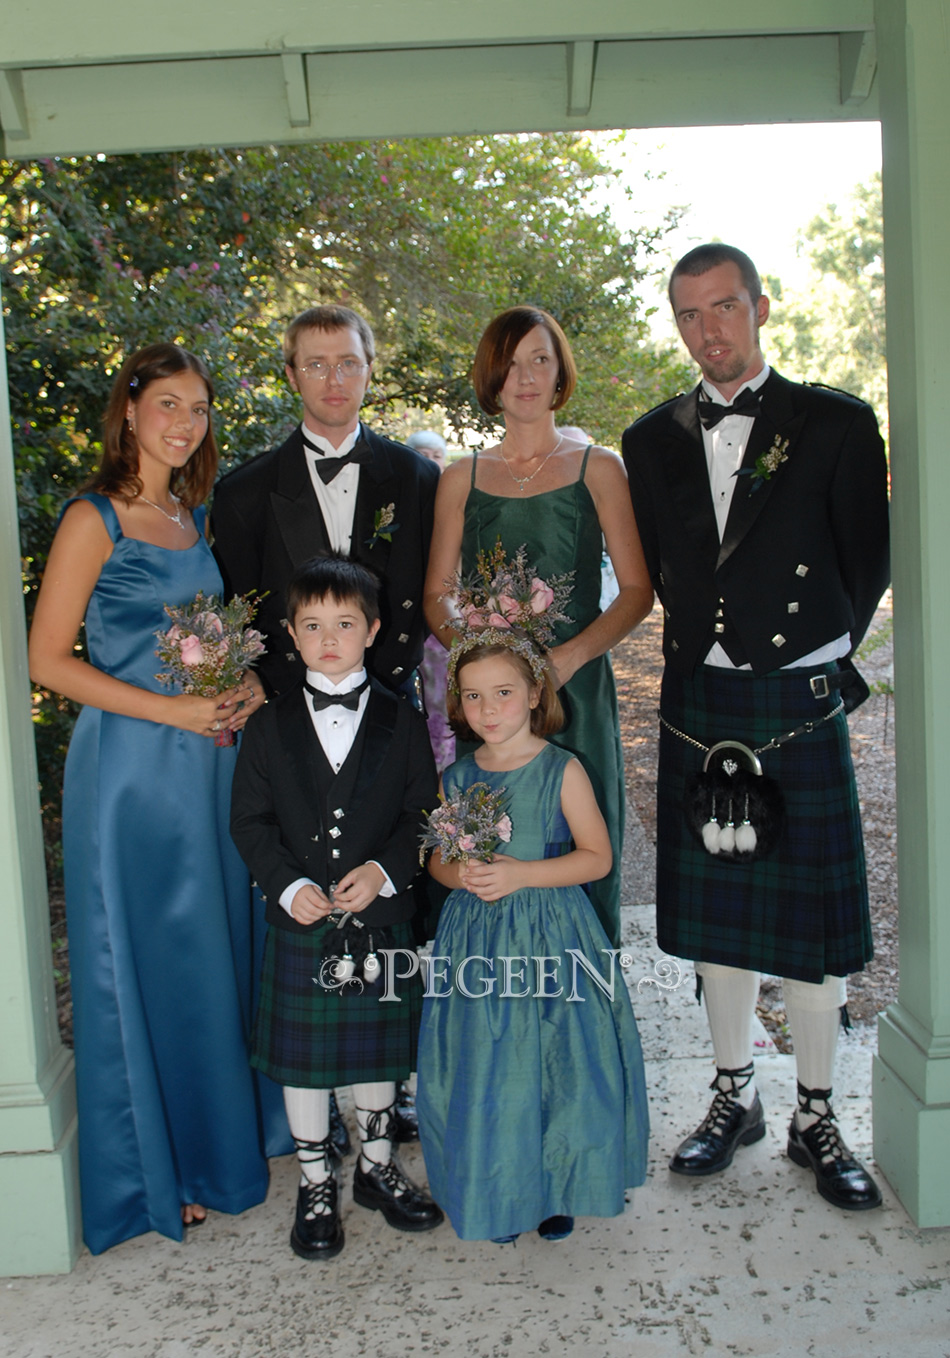 Scottish weddings hazel and plaid flower girl dress by Pegeen